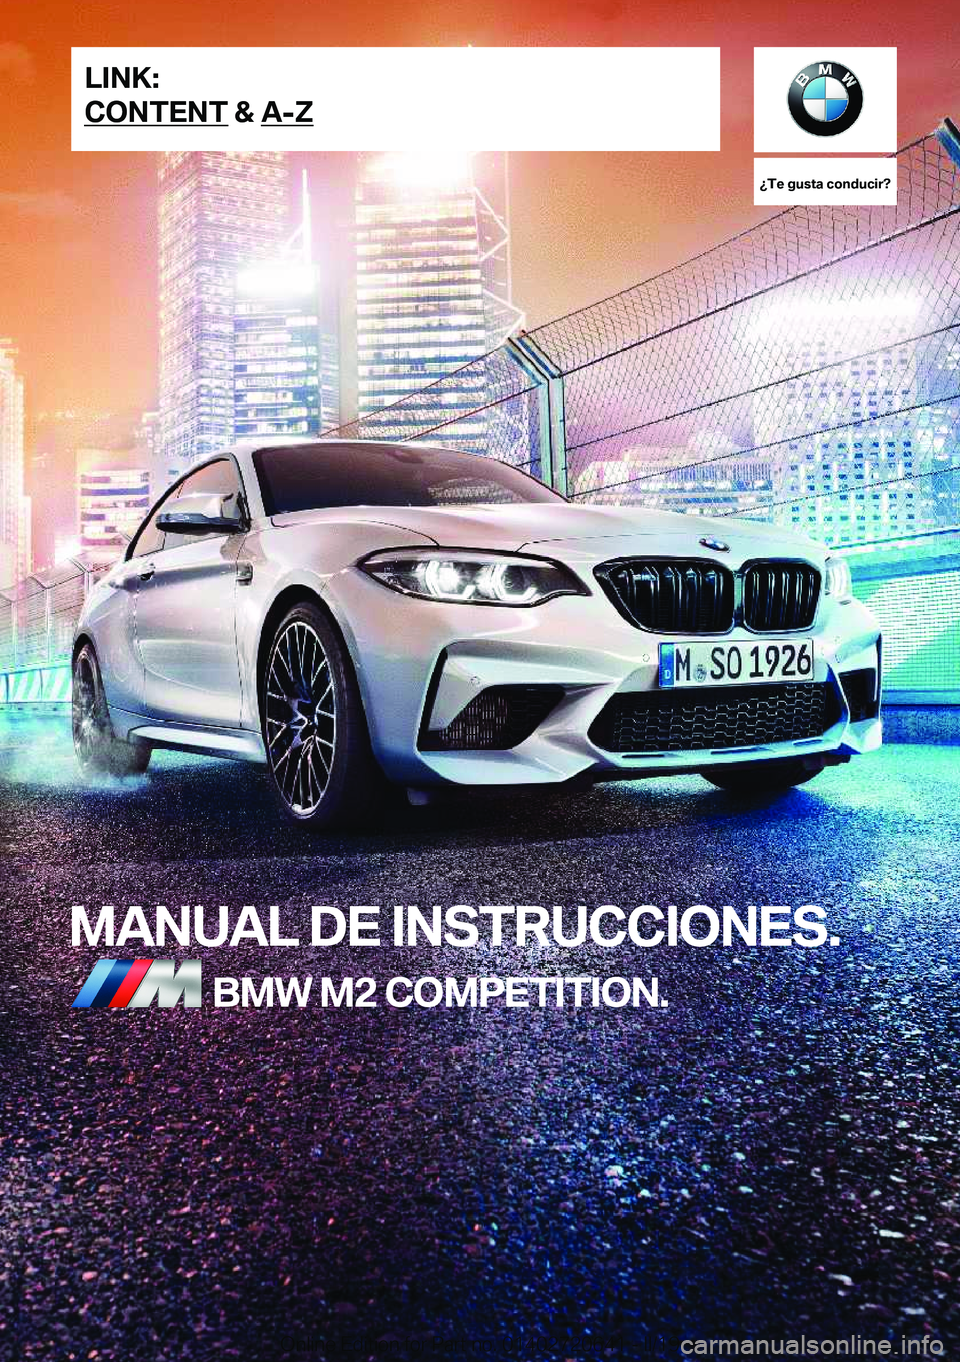 BMW M2 2020  Manuales de Empleo (in Spanish) ��T�e��g�u�s�t�a��c�o�n�d�u�c�i�r� 
�M�A�N�U�A�L��D�E��I�N�S�T�R�U�C�C�I�O�N�E�S�.�B�M�W��M�2��C�O�M�P�E�T�I�T�I�O�N�.�L�I�N�K�:
�C�O�N�T�E�N�T��&��A�-�;�O�n�l�i�n�e��E�d�i�t�i�o�n��f�o�r�